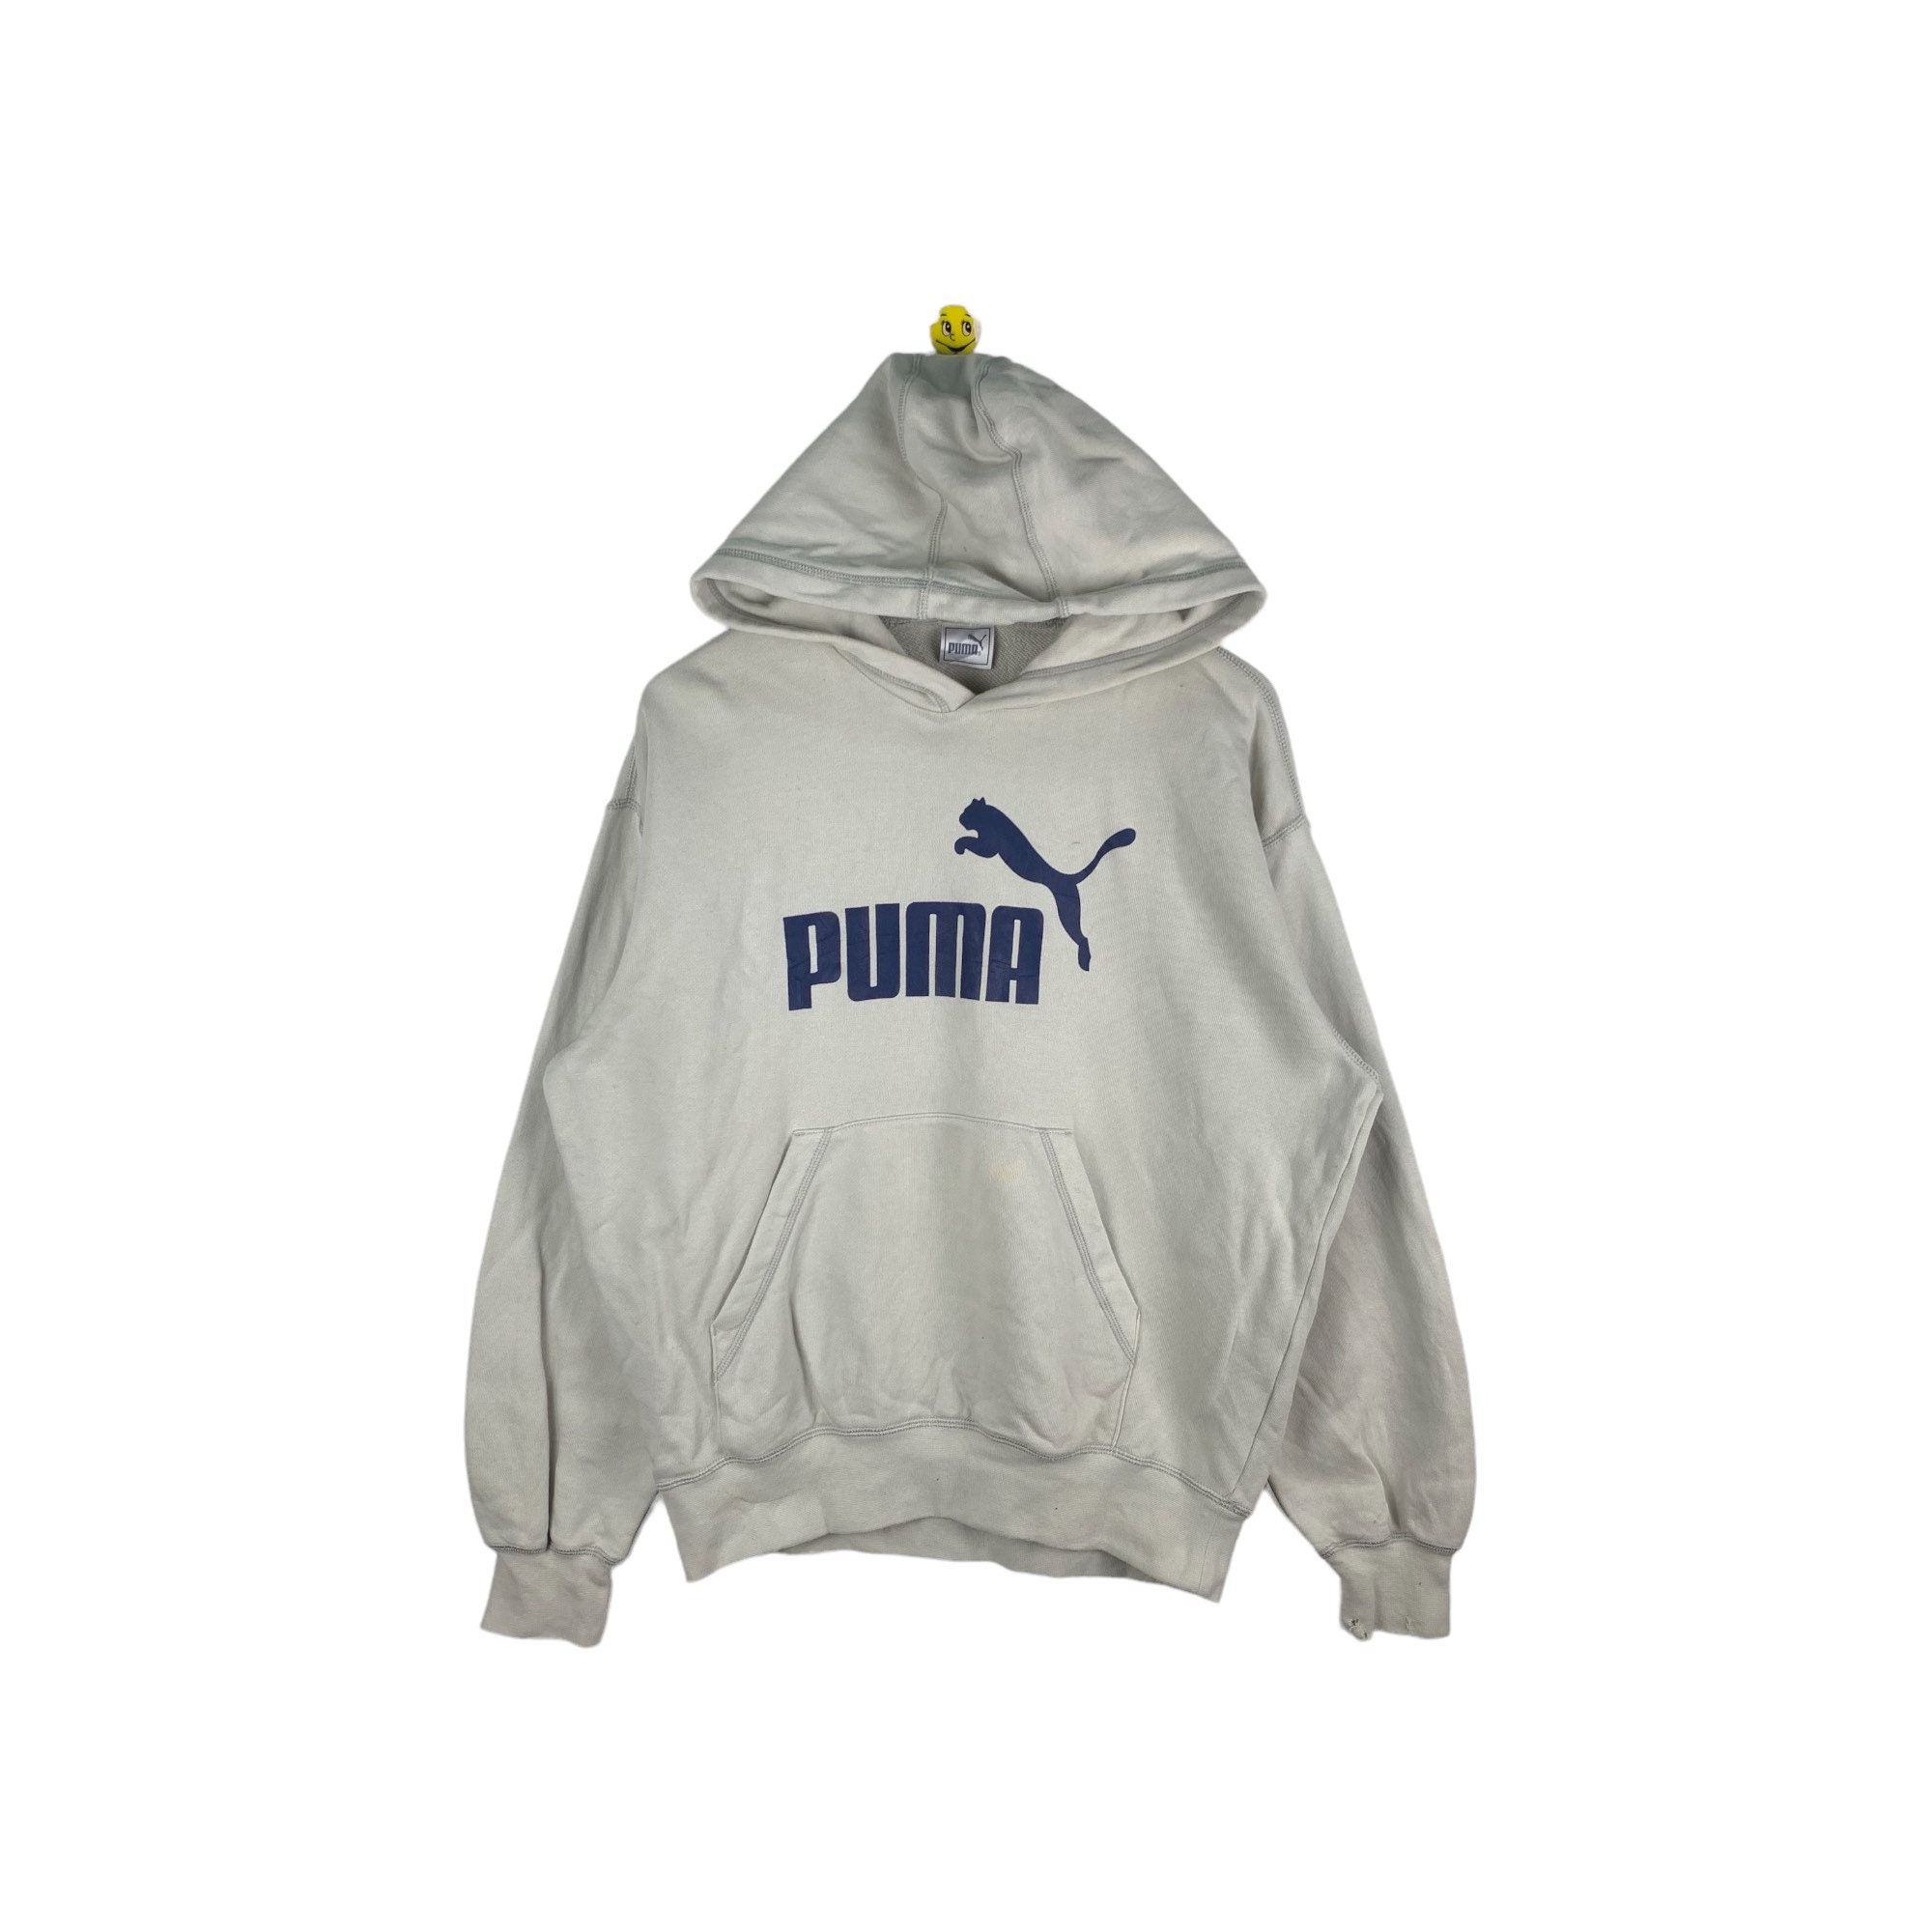 Buy Rare 80s Vintage Puma Hoodies Sweatshirt / Jumper Pullover / Cream  Colour / Puma Large Size Online in India 